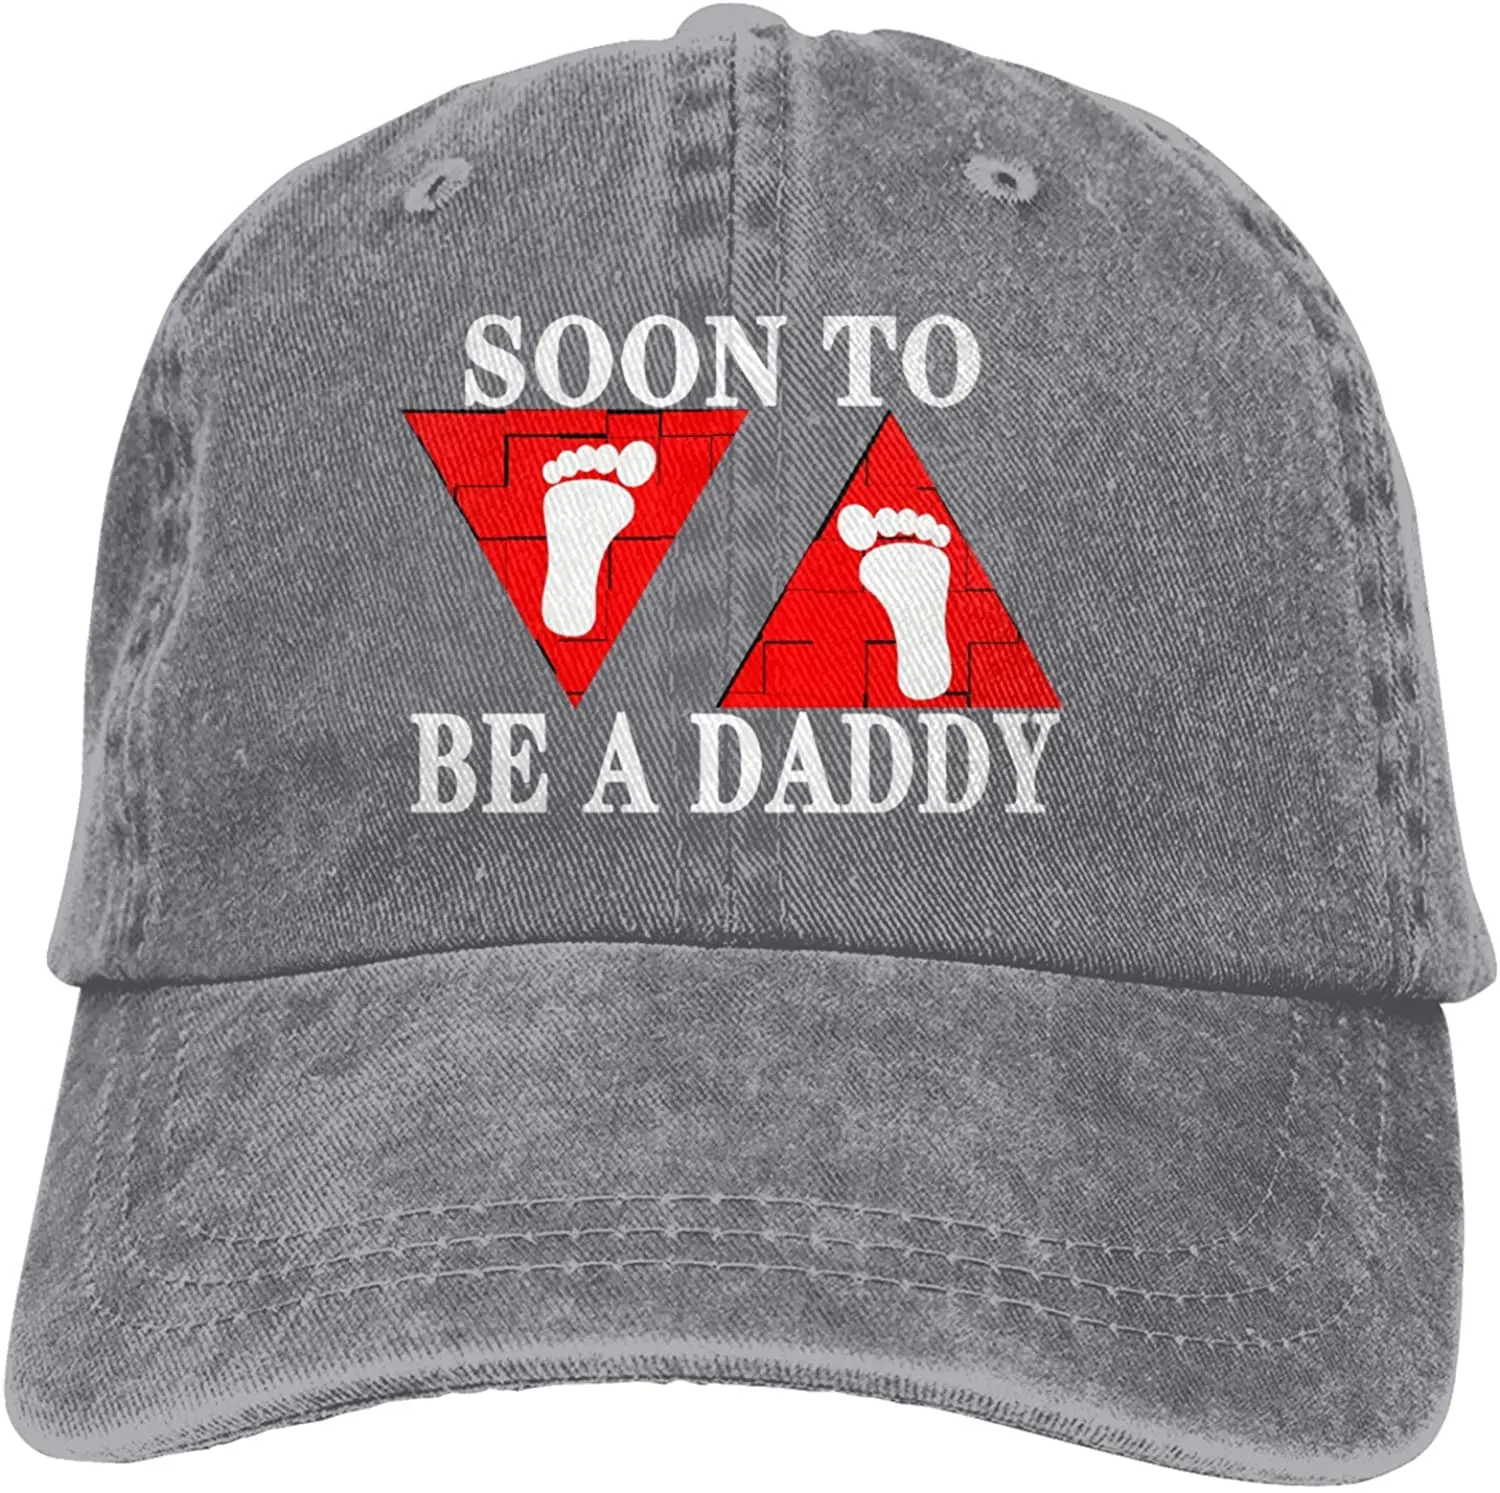 

Soon to Be A Daddy Sports Denim Cap Adjustable Unisex Plain Baseball Cowboy Snapback Hat